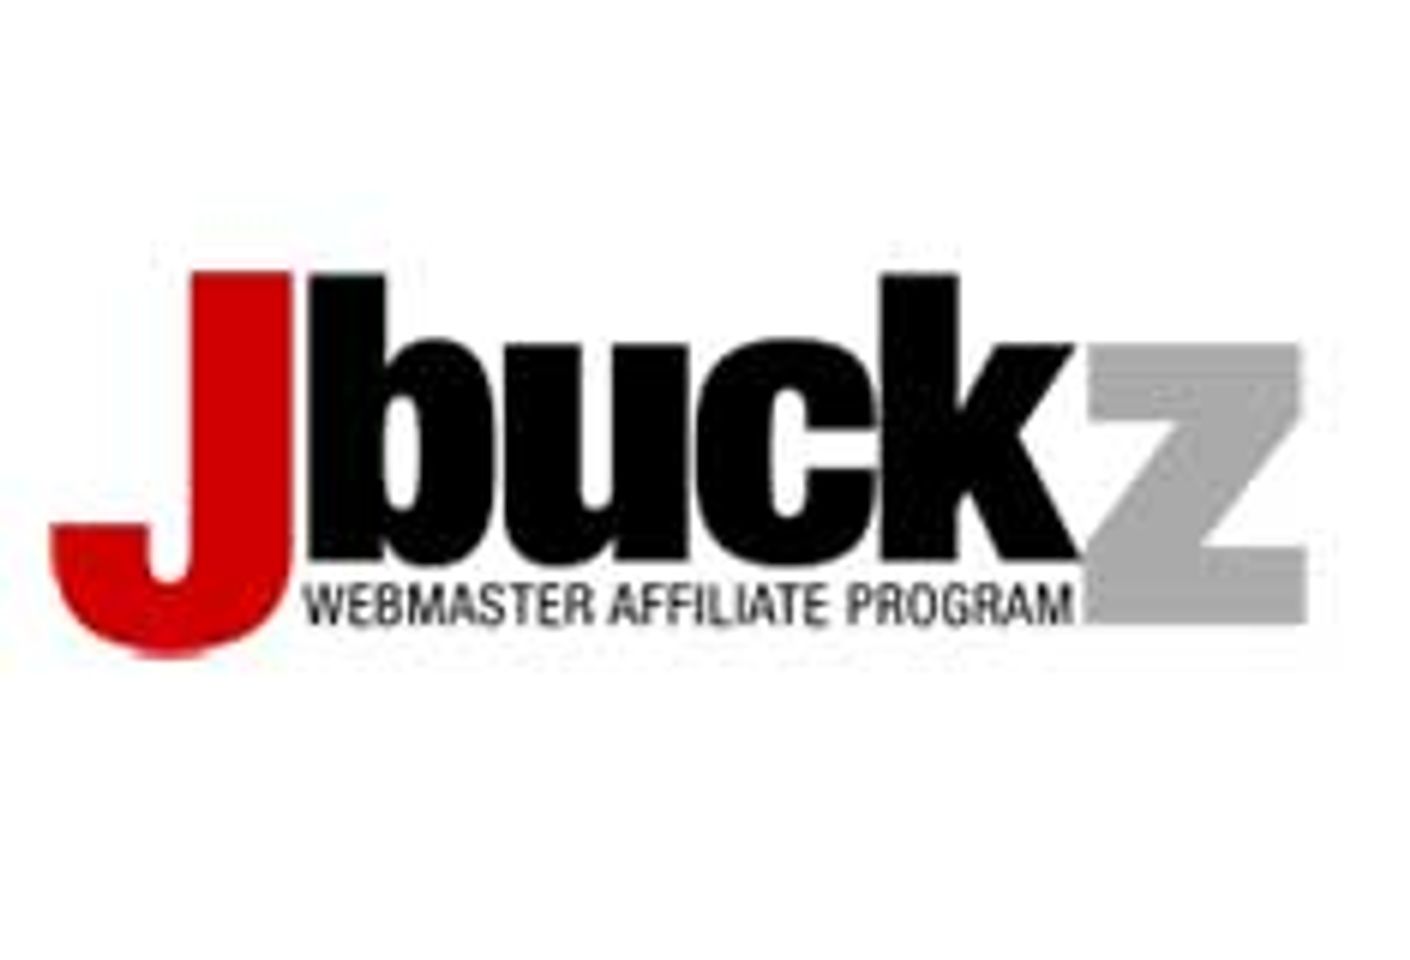 Panorama Pacific Ltd. Releases JBuckz.com Affiliate Program